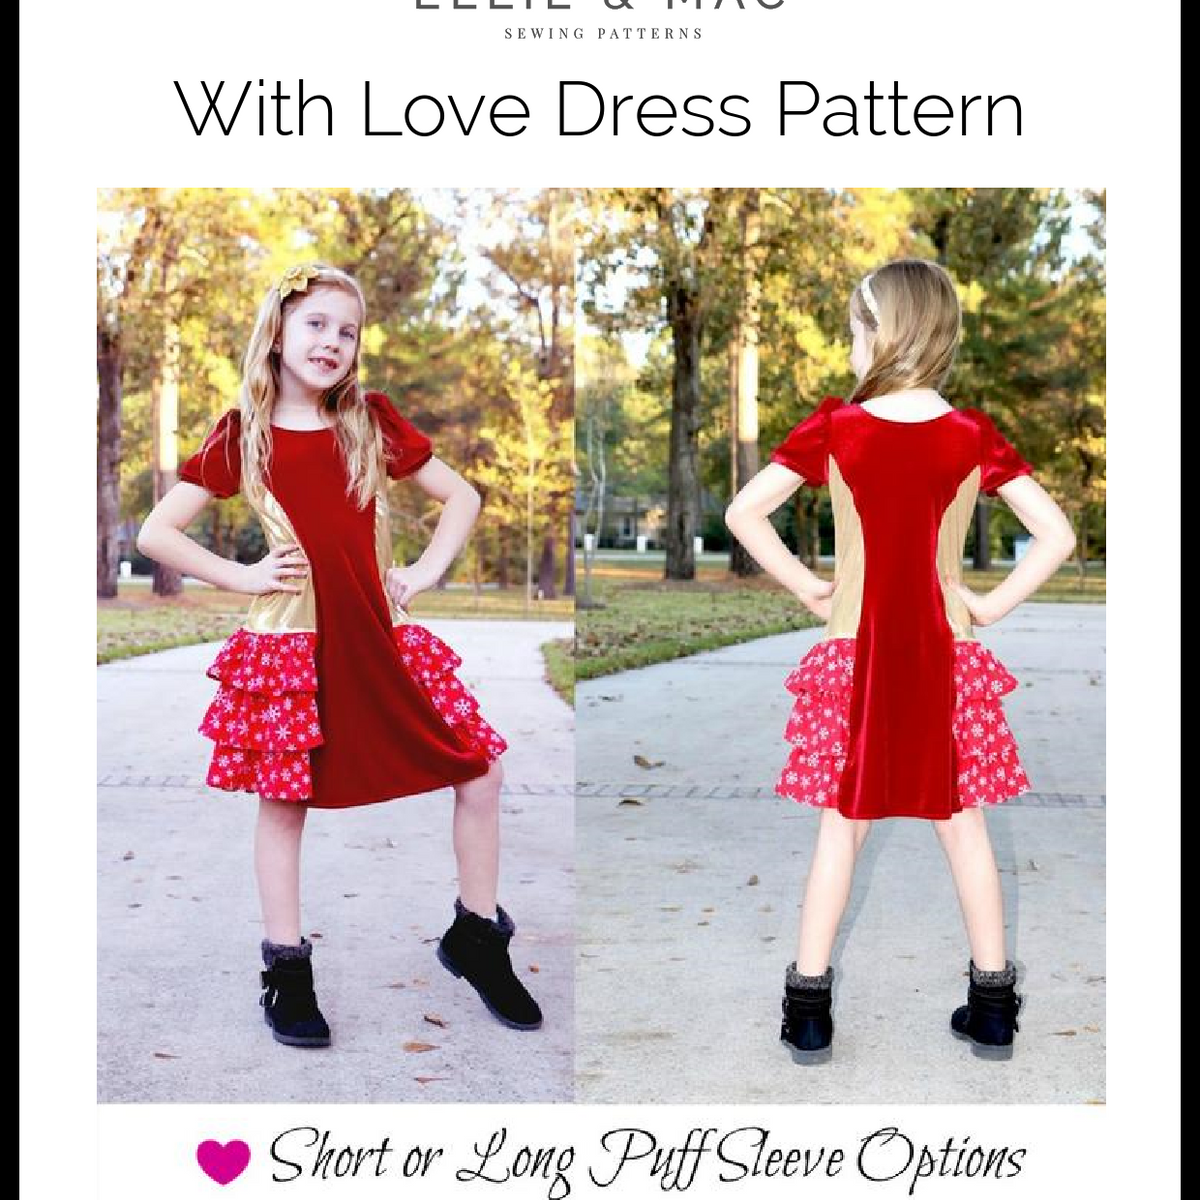 Princess of Time Cosplay Sewing Pattern Digital Download 